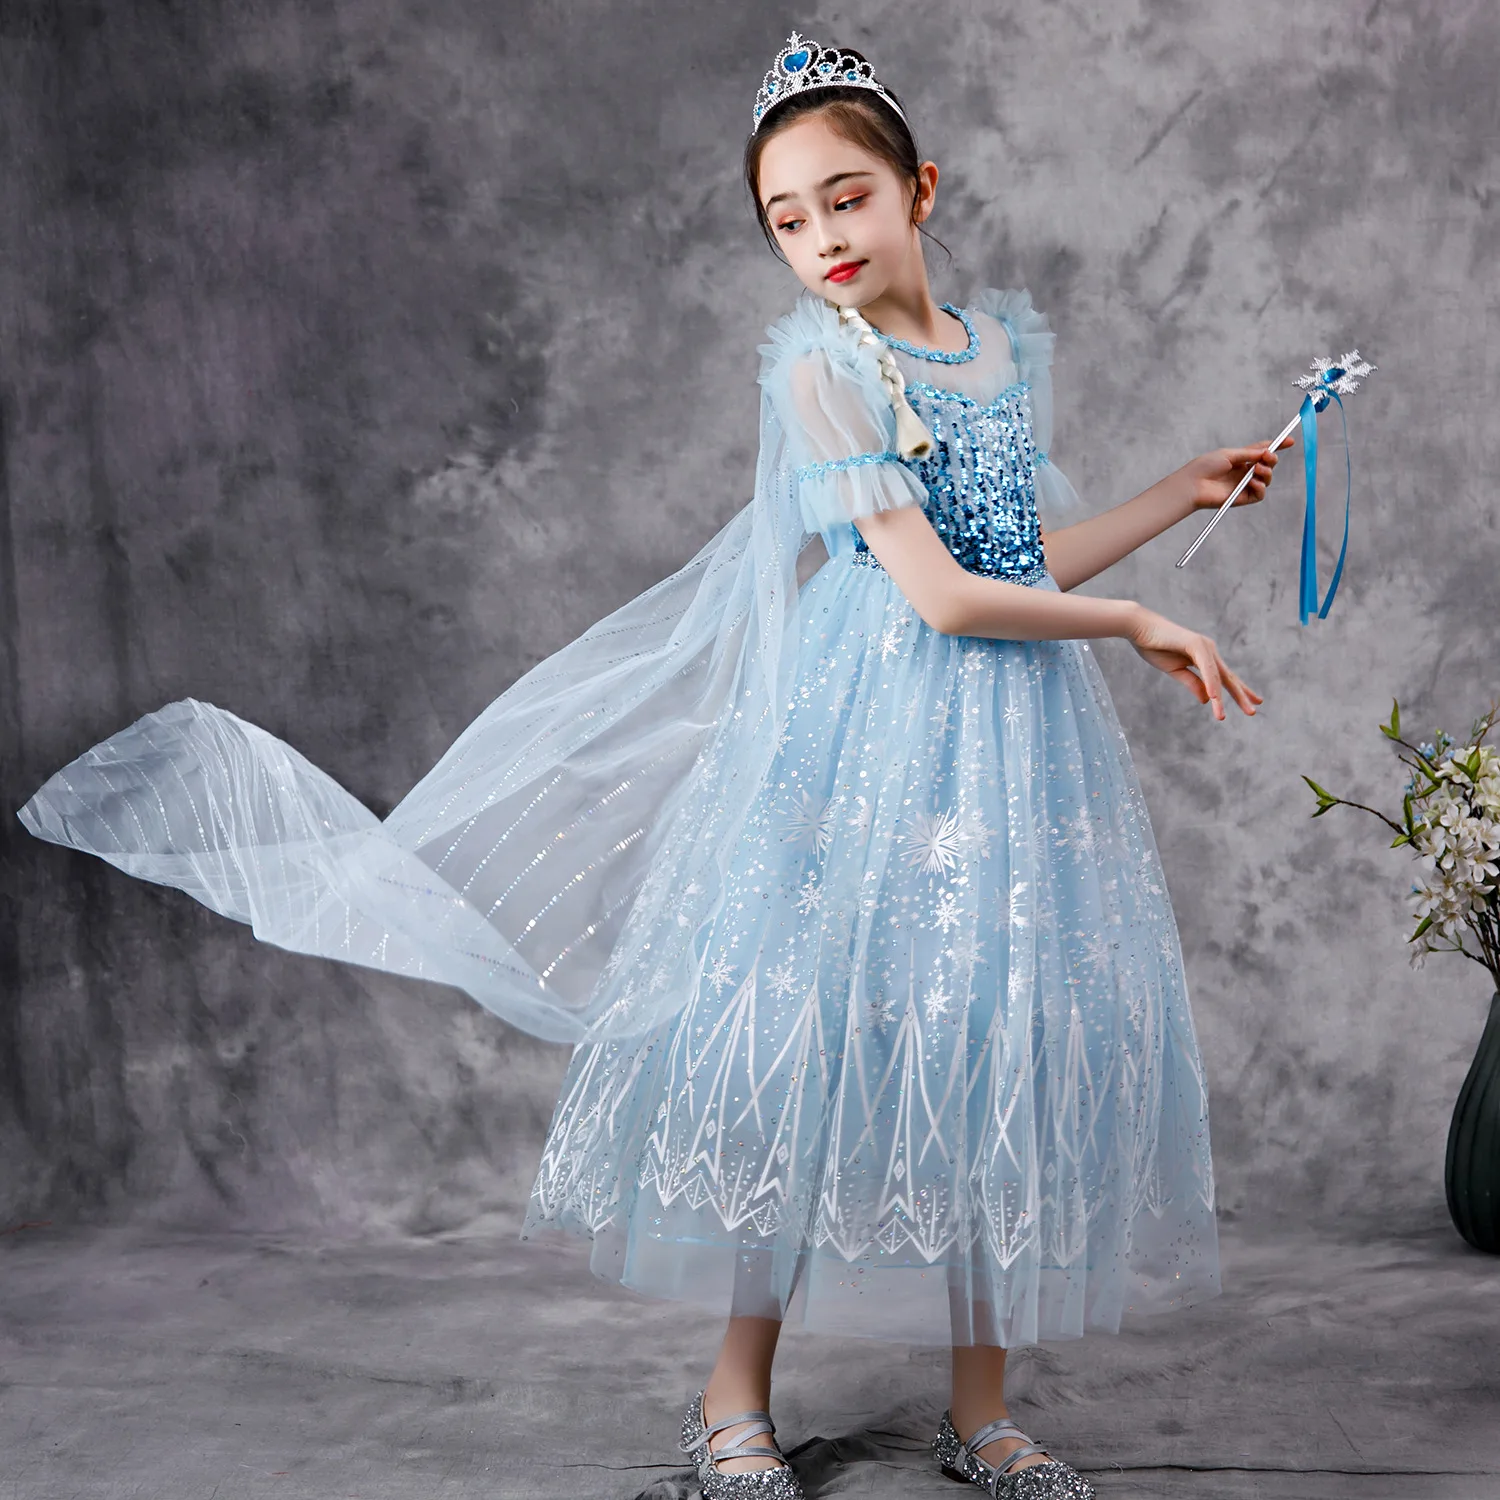 

MQATZ Summer TV Movie Role Elsa Anna 2 Girls Princess Costumes Birthday Party Dress BX1759, Blue